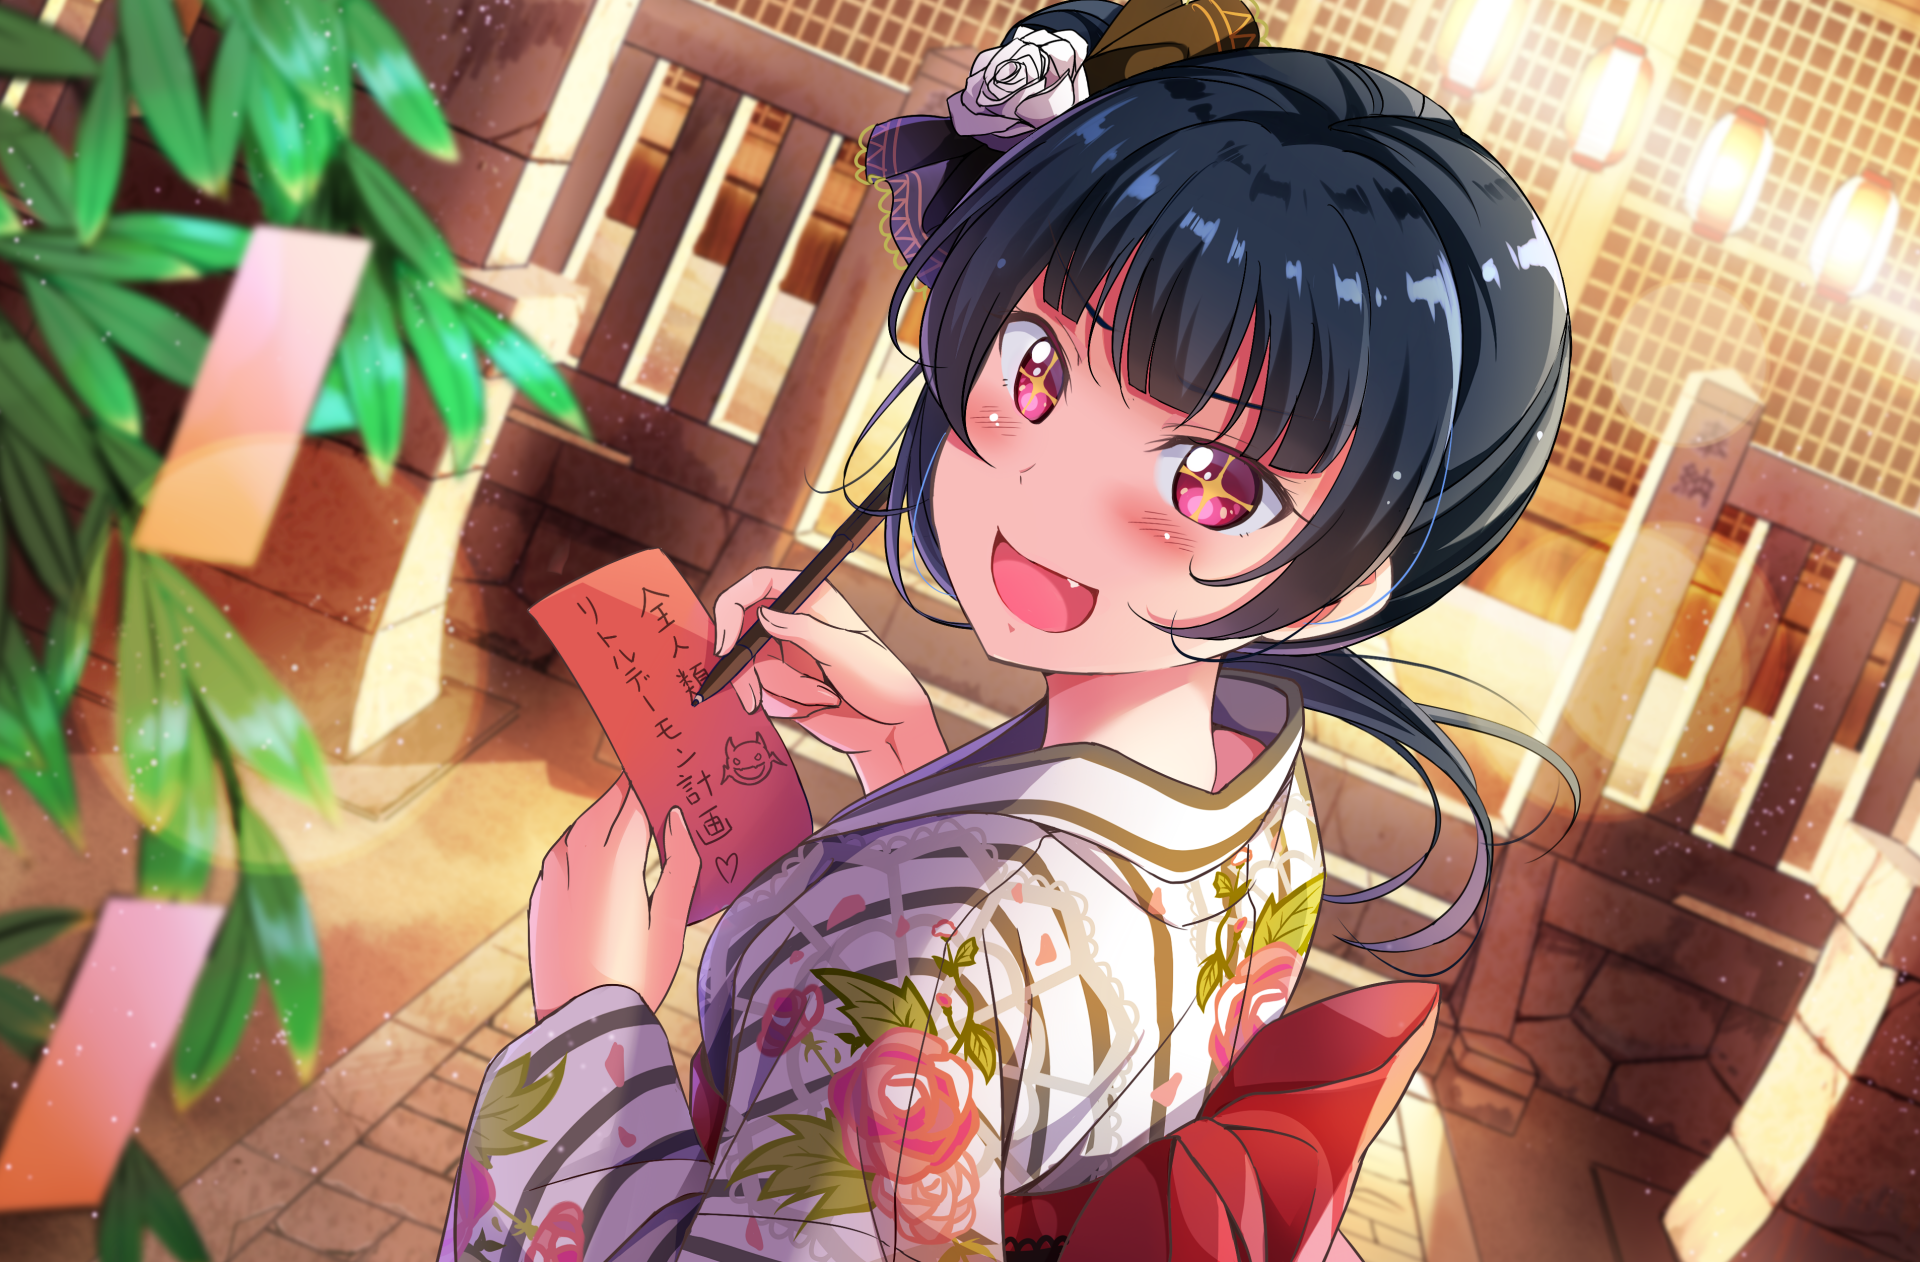 Anime Love wallpaper by SakuraHigurashi - Download on ZEDGE™